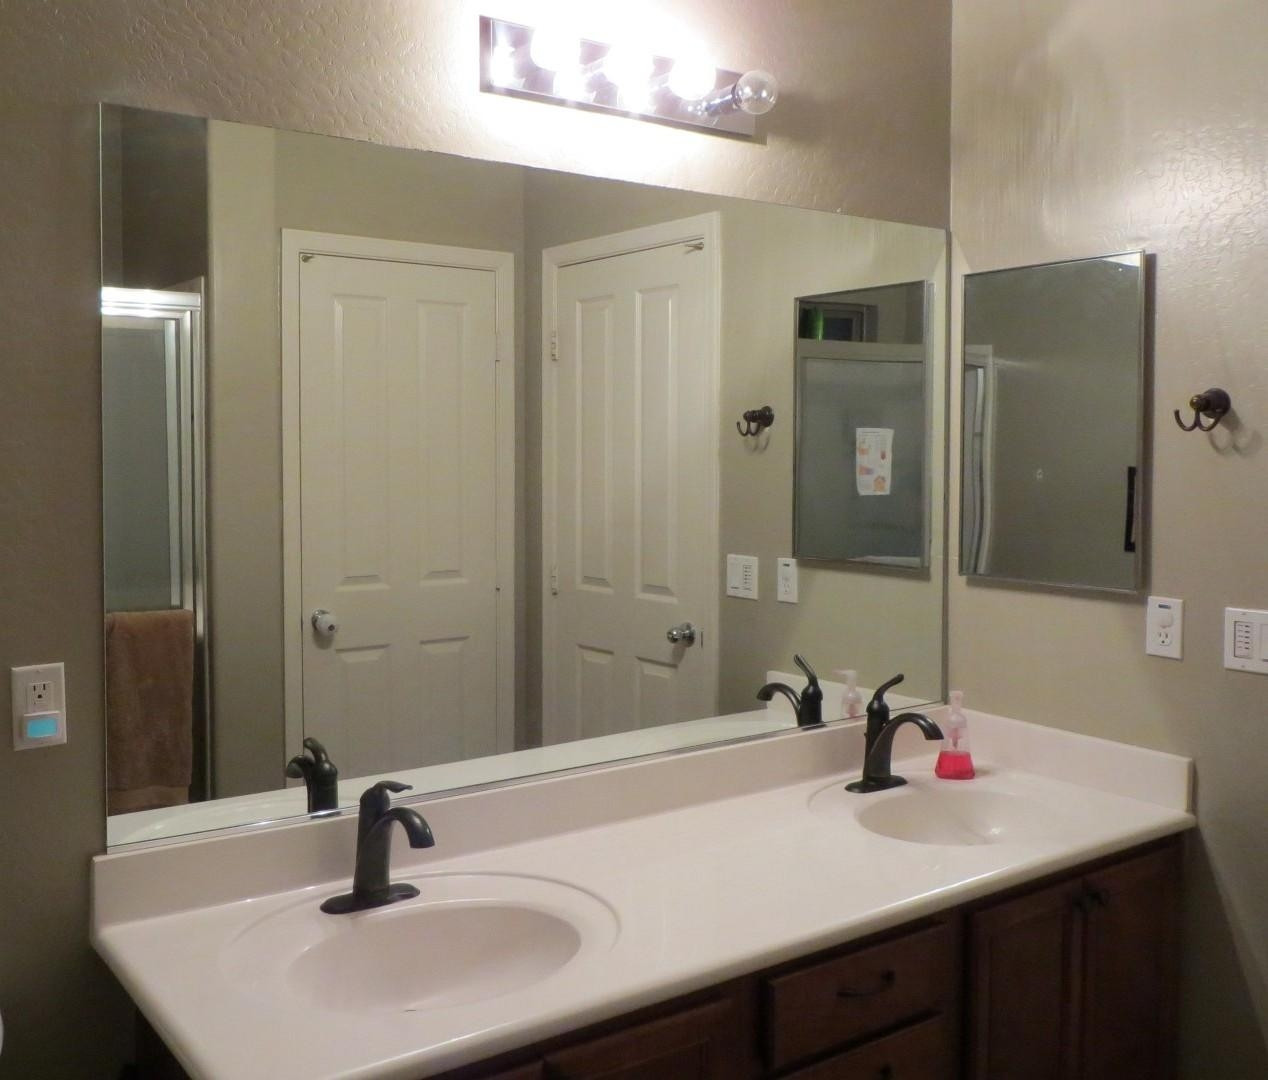 Lowes Mirrors Bathroom
 20 Ideas of Mirrors for Bathroom Walls